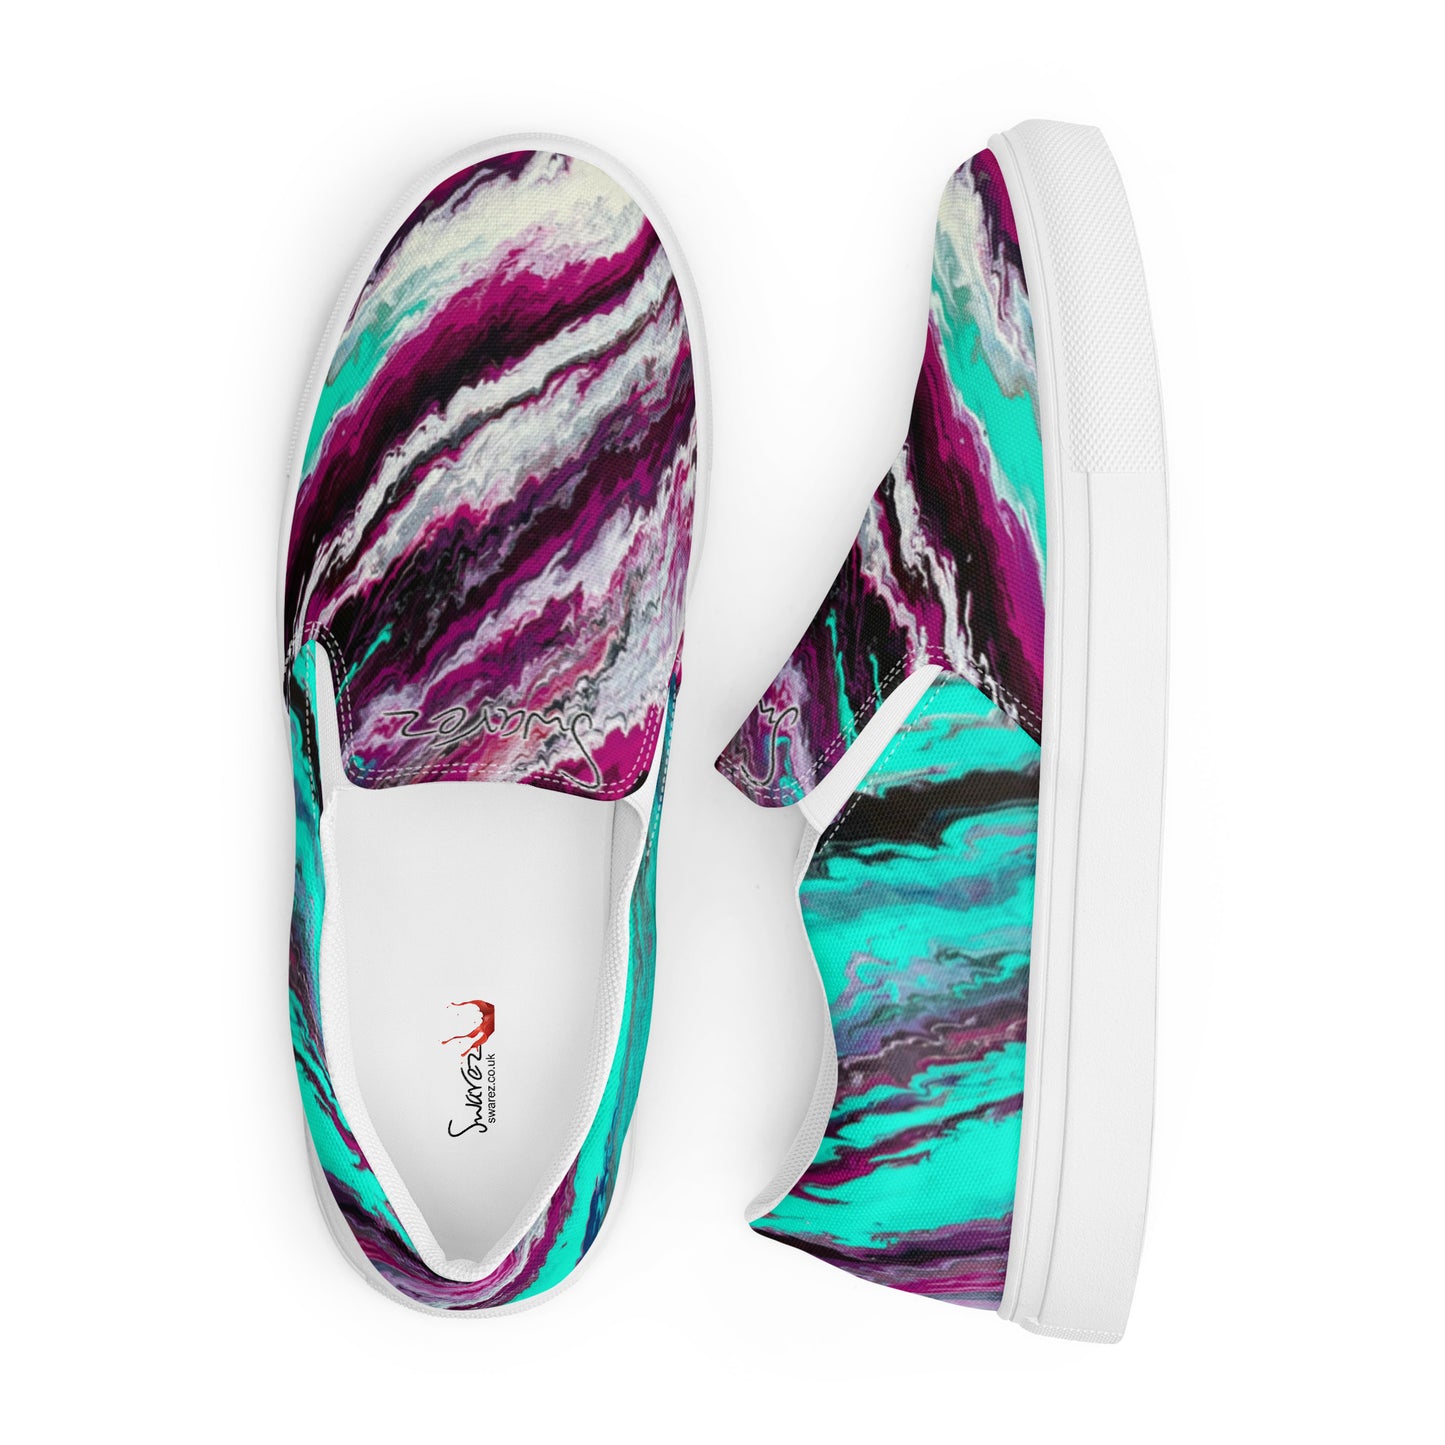 Women’s slip-on canvas shoes - Neon Canyon design